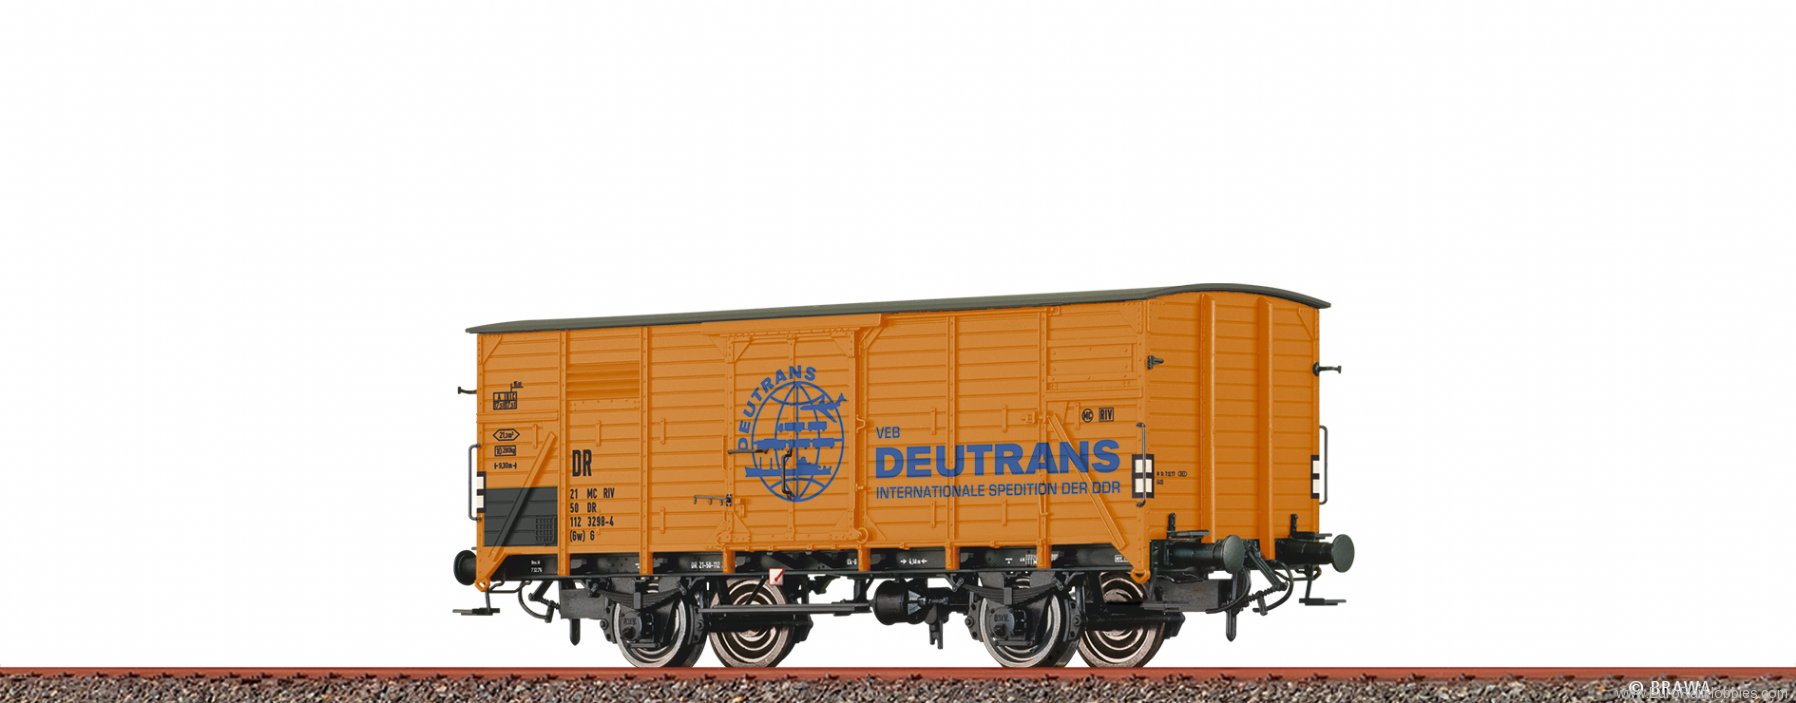 Brawa 50968 Covered Freight Car Gw Deutrans DR